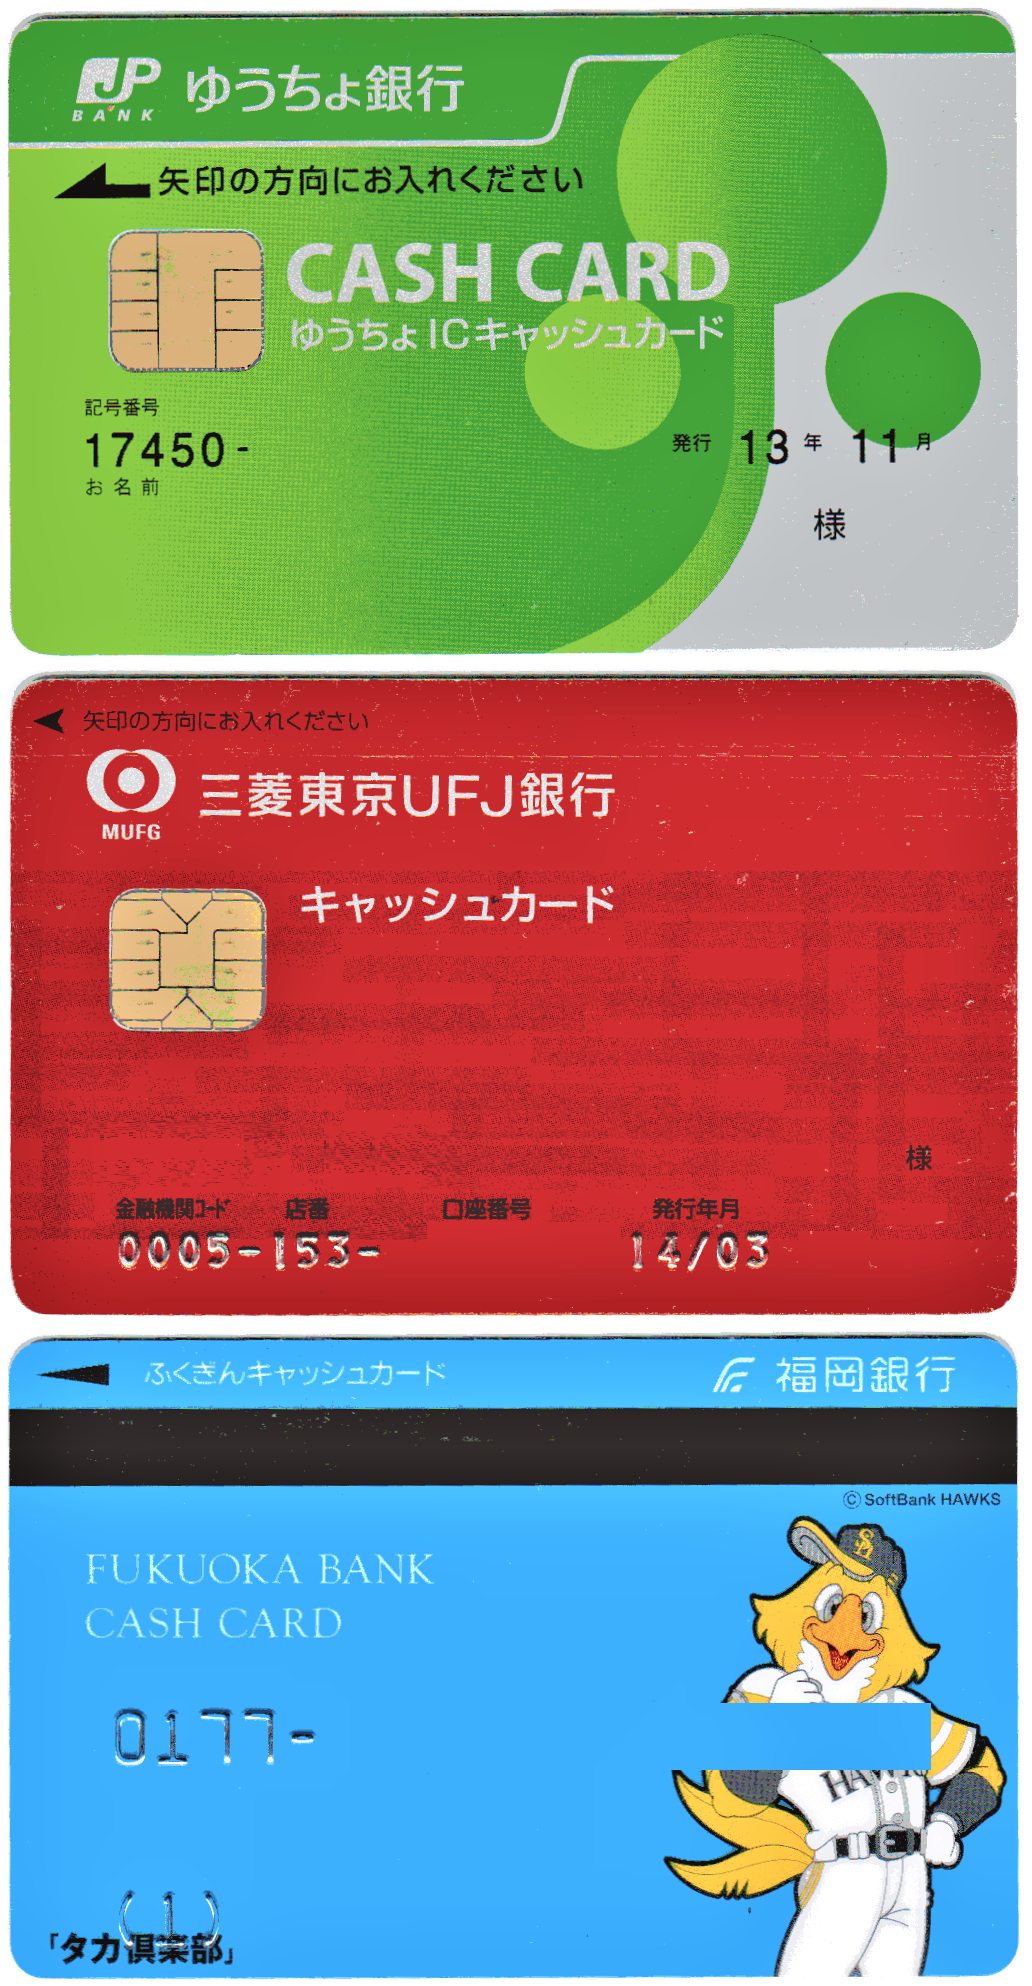 Contoh kartu ATM/repro